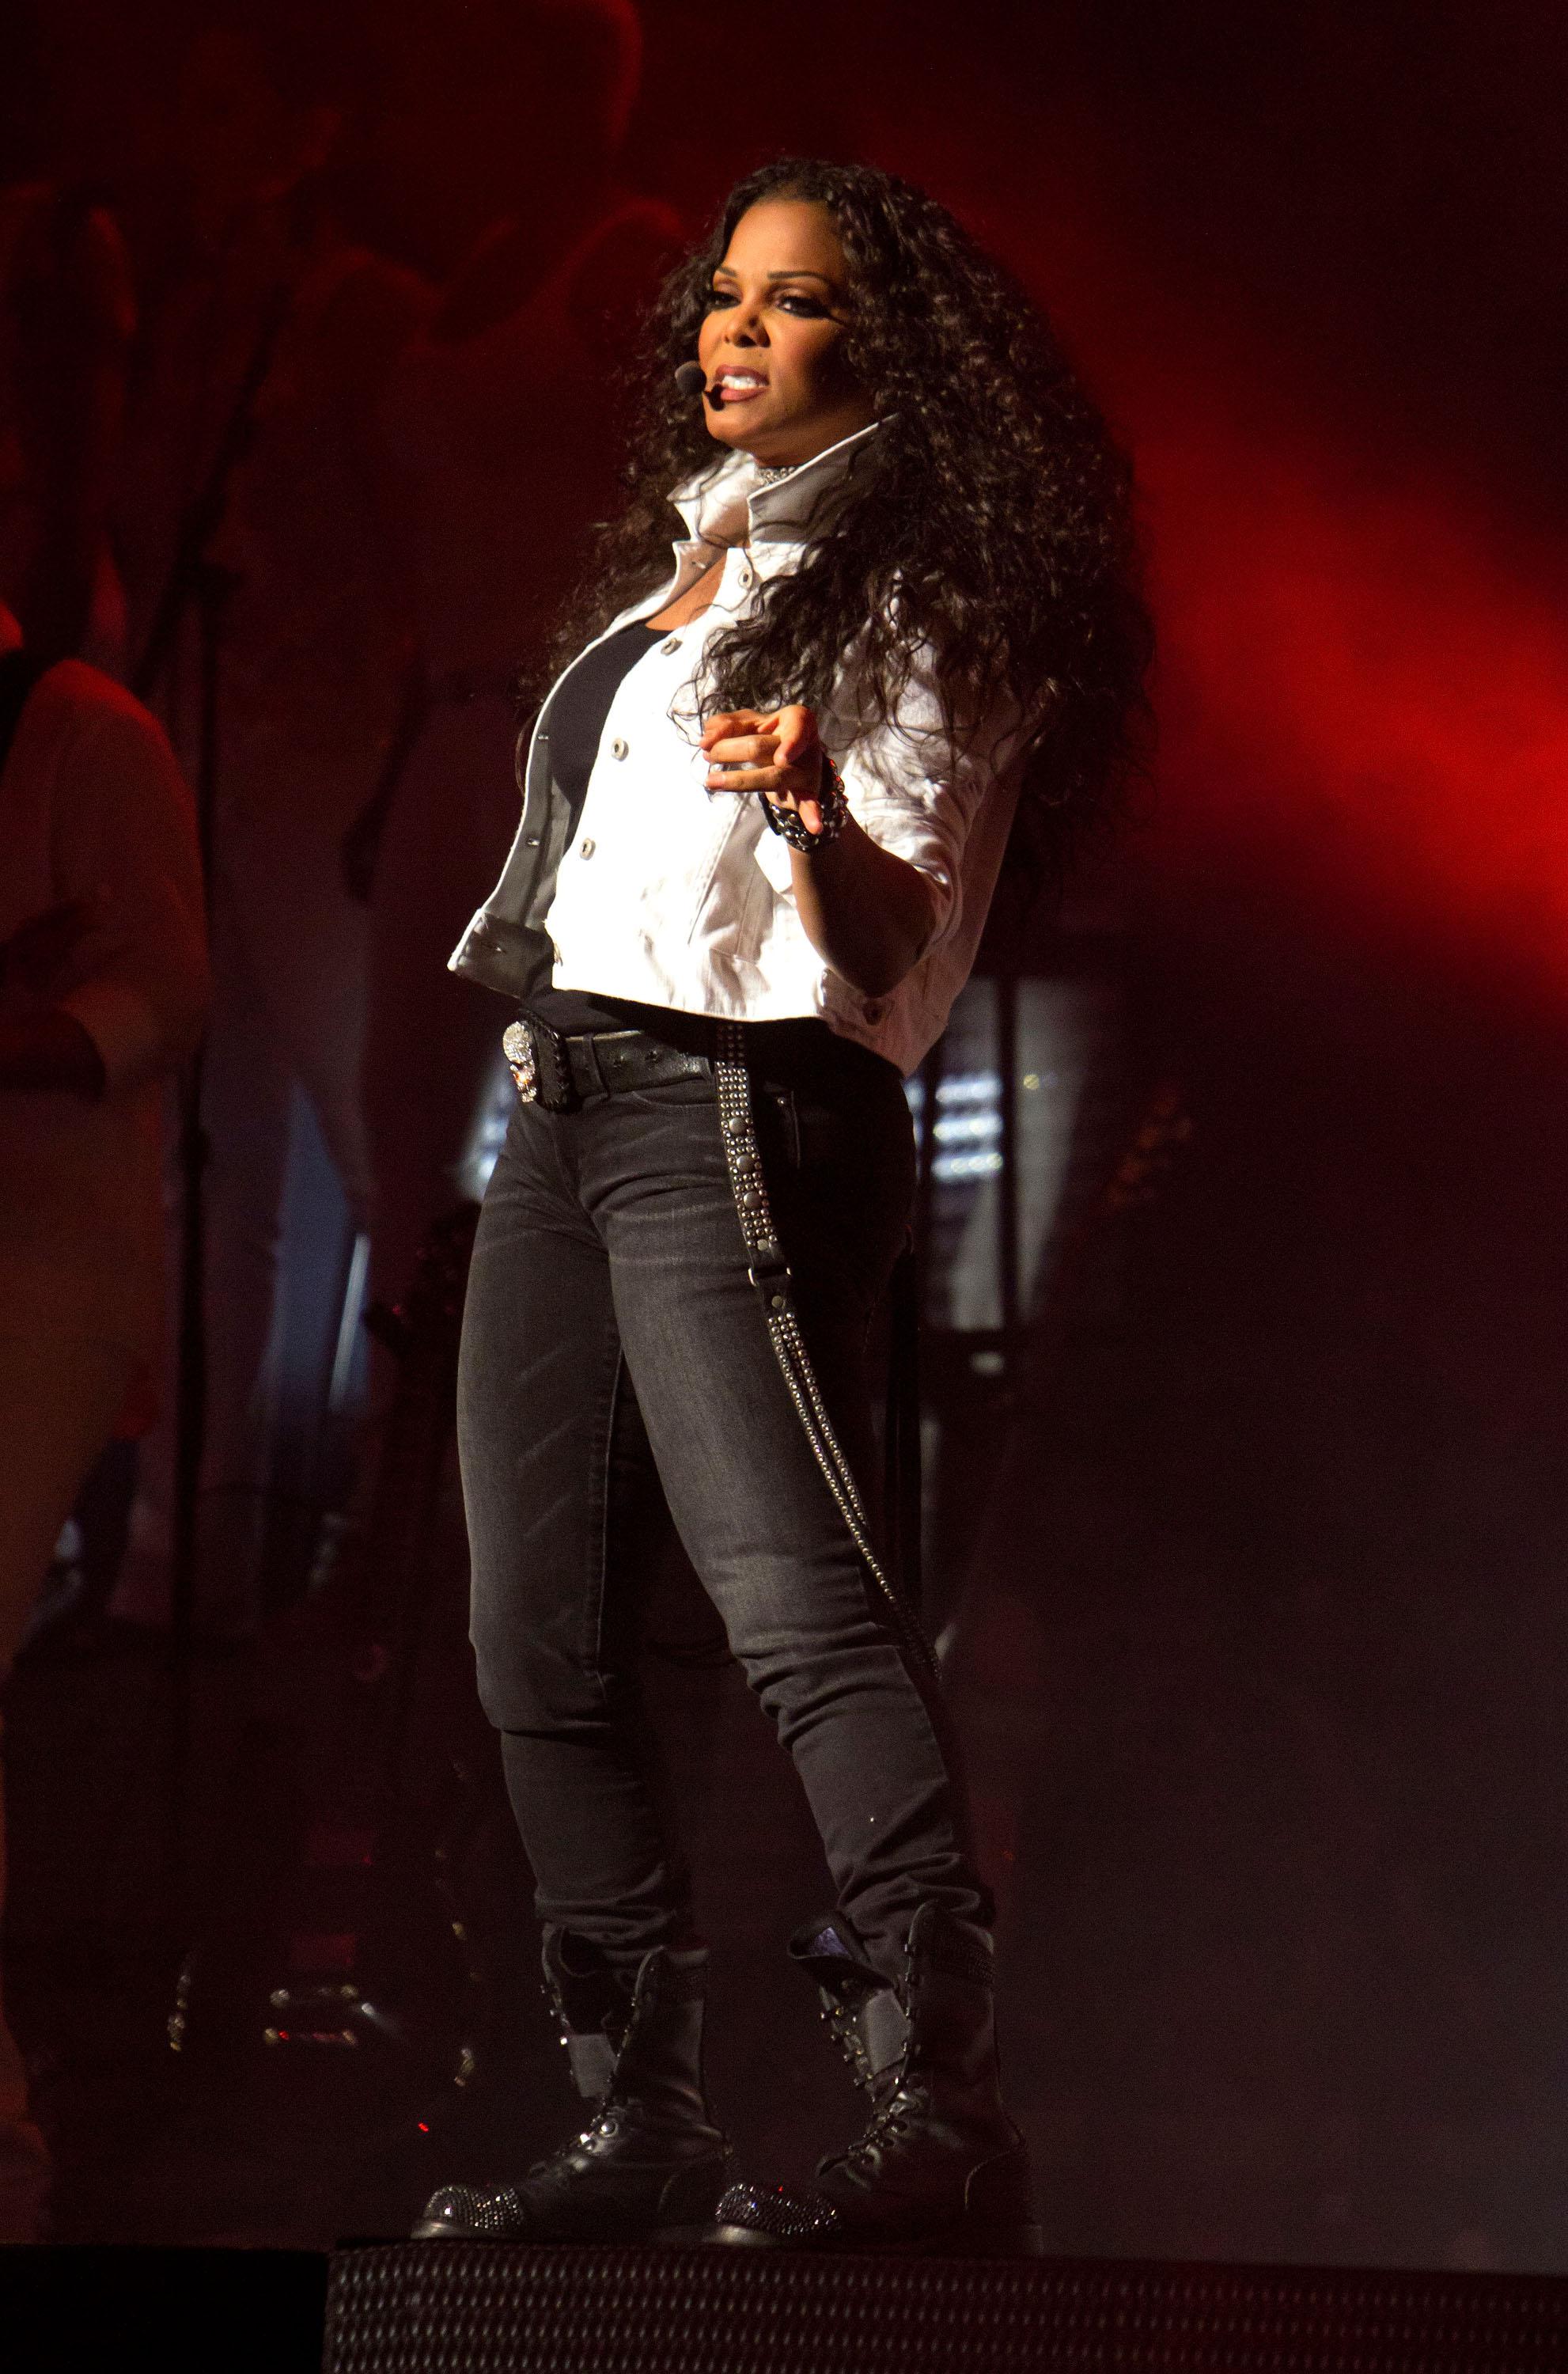 Janet Jackson In Concert